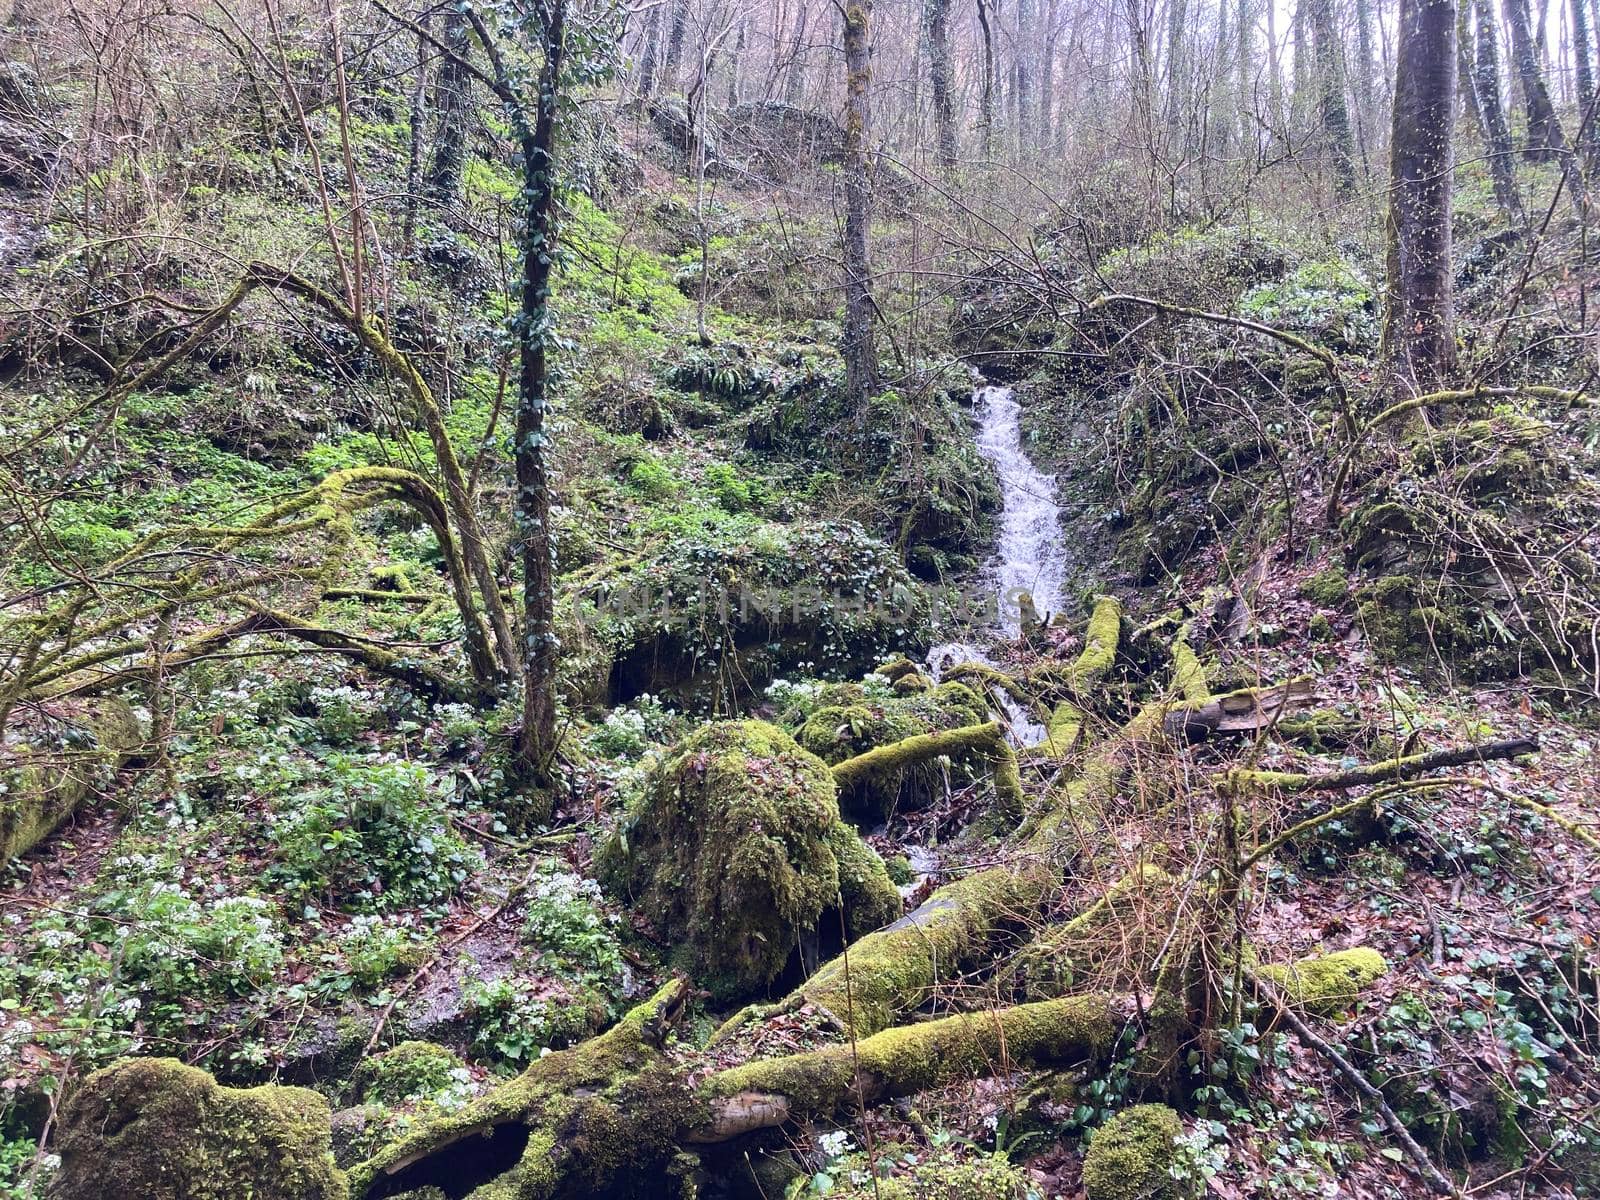 Small rapid stream flowing on rocks. Mountain clean waterway flowing down through mountainous terrain in wood